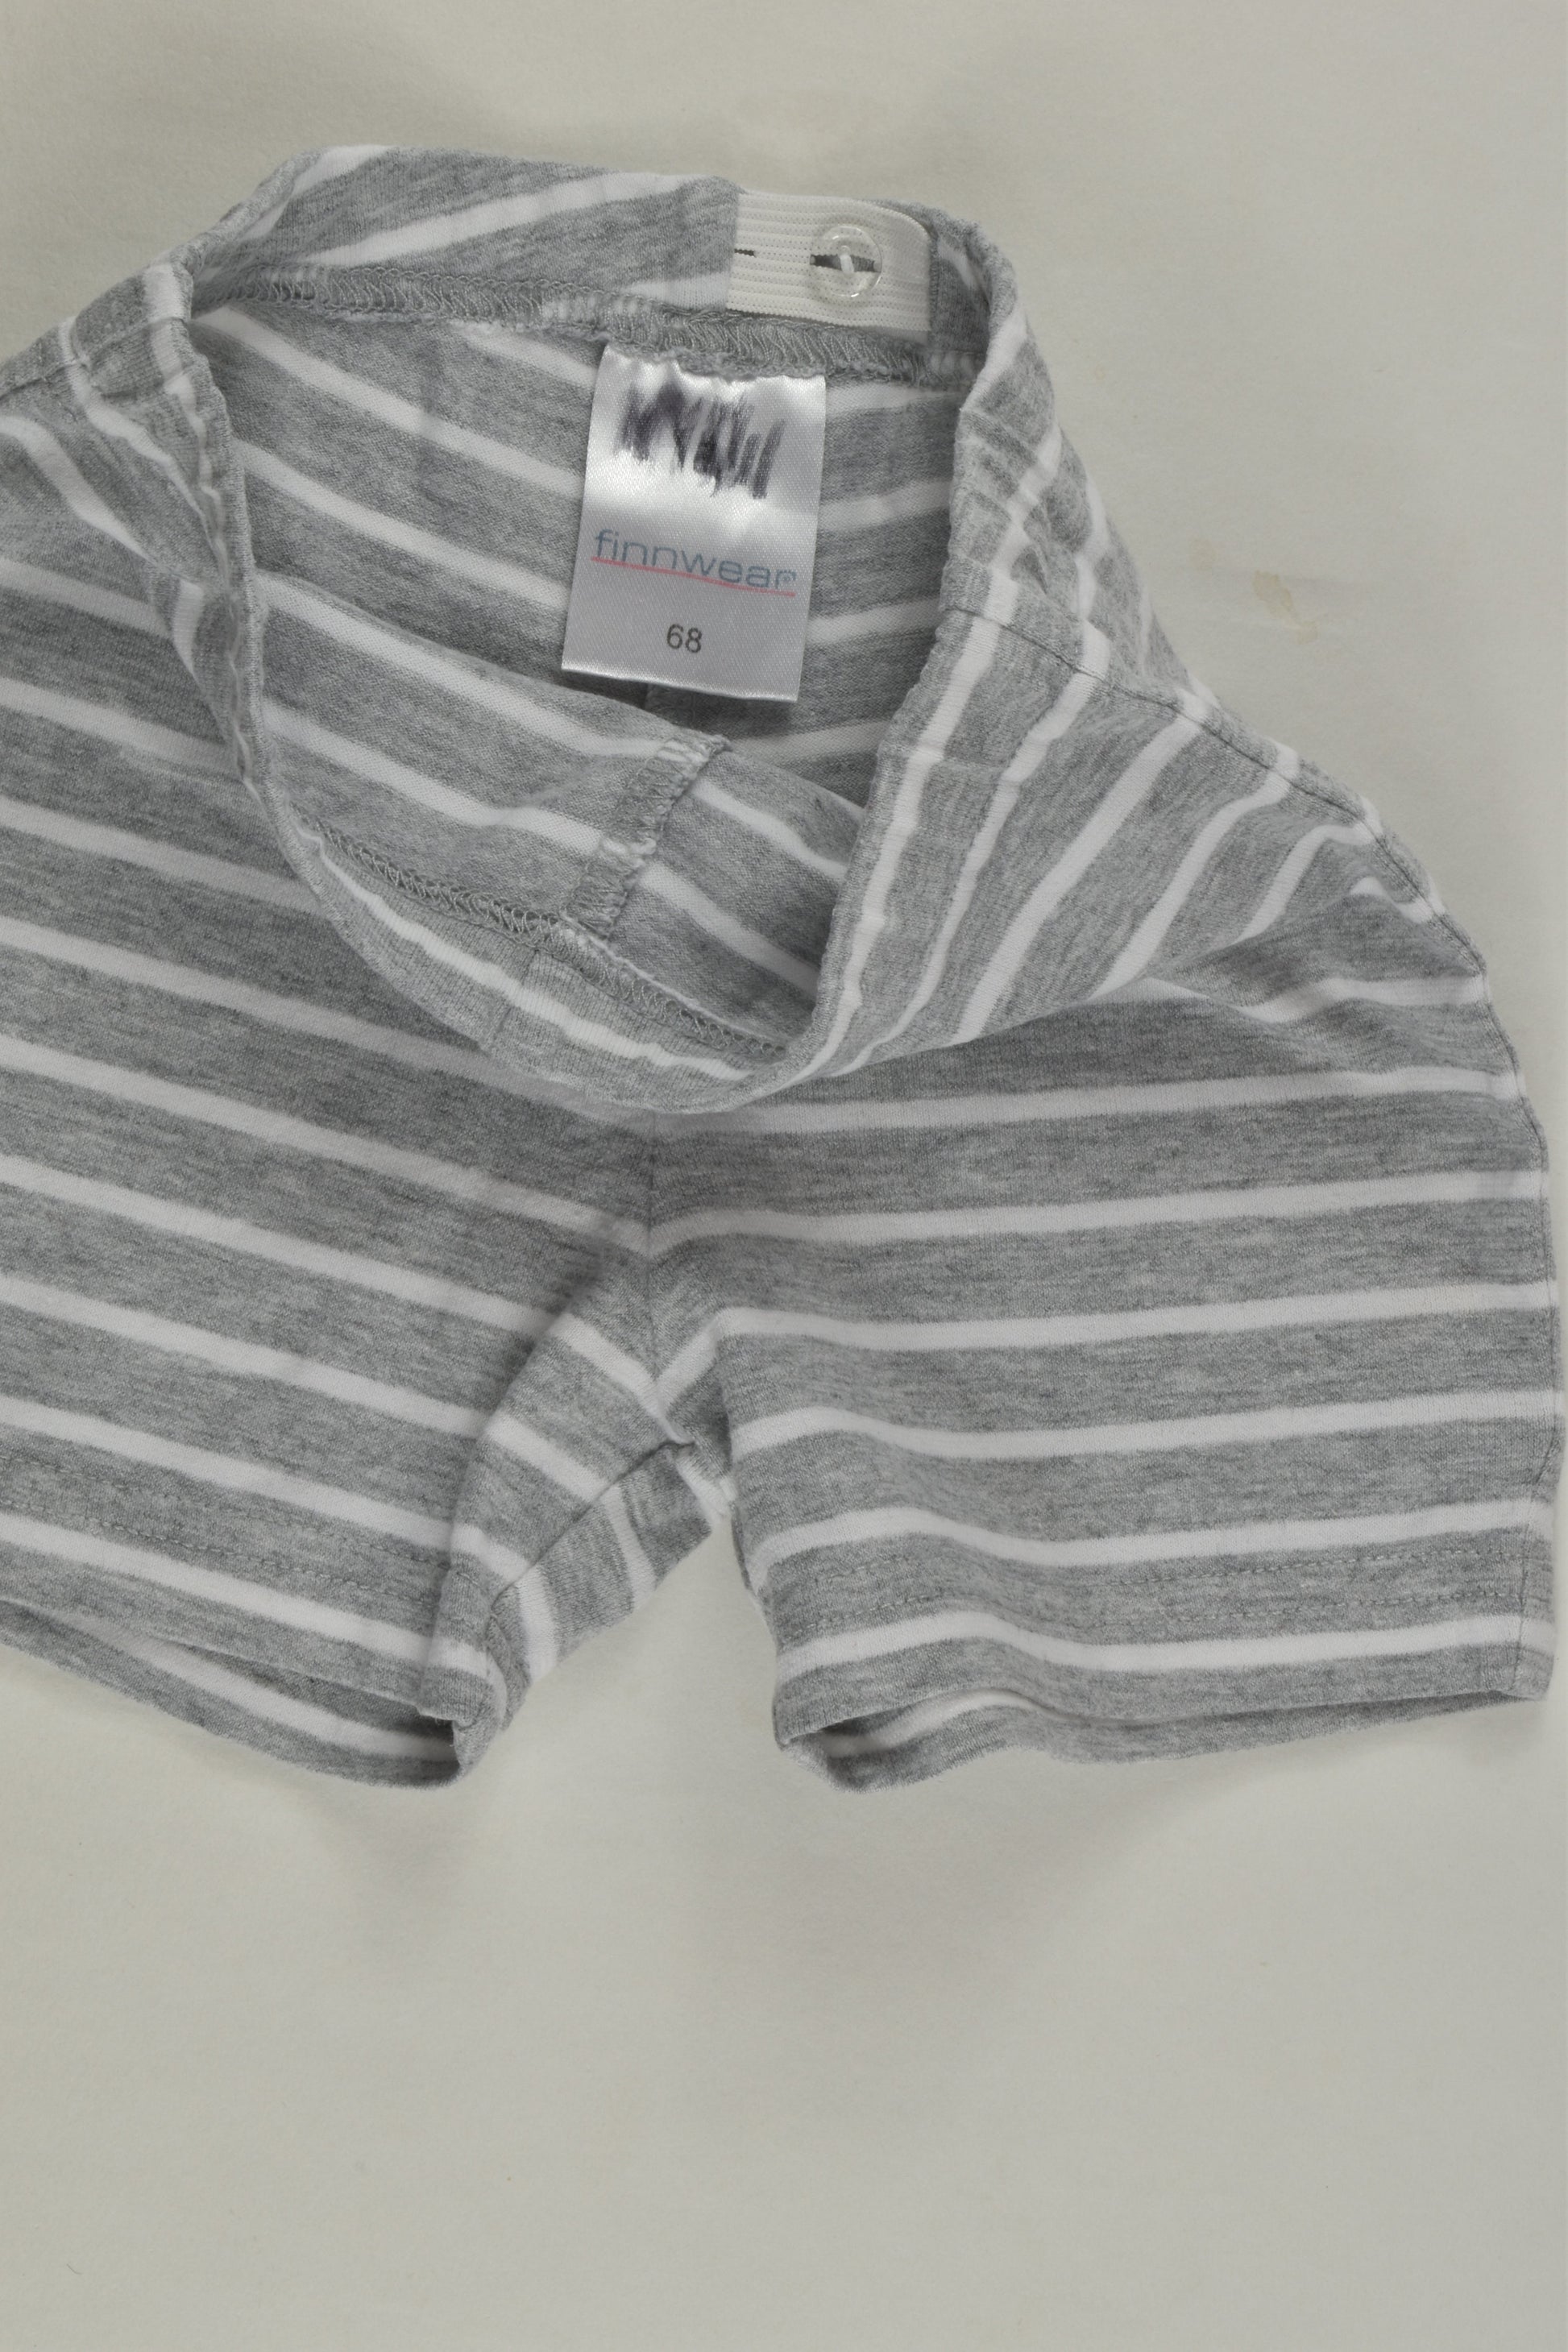 Finnwear Size 00 (68 cm) Striped Shorts